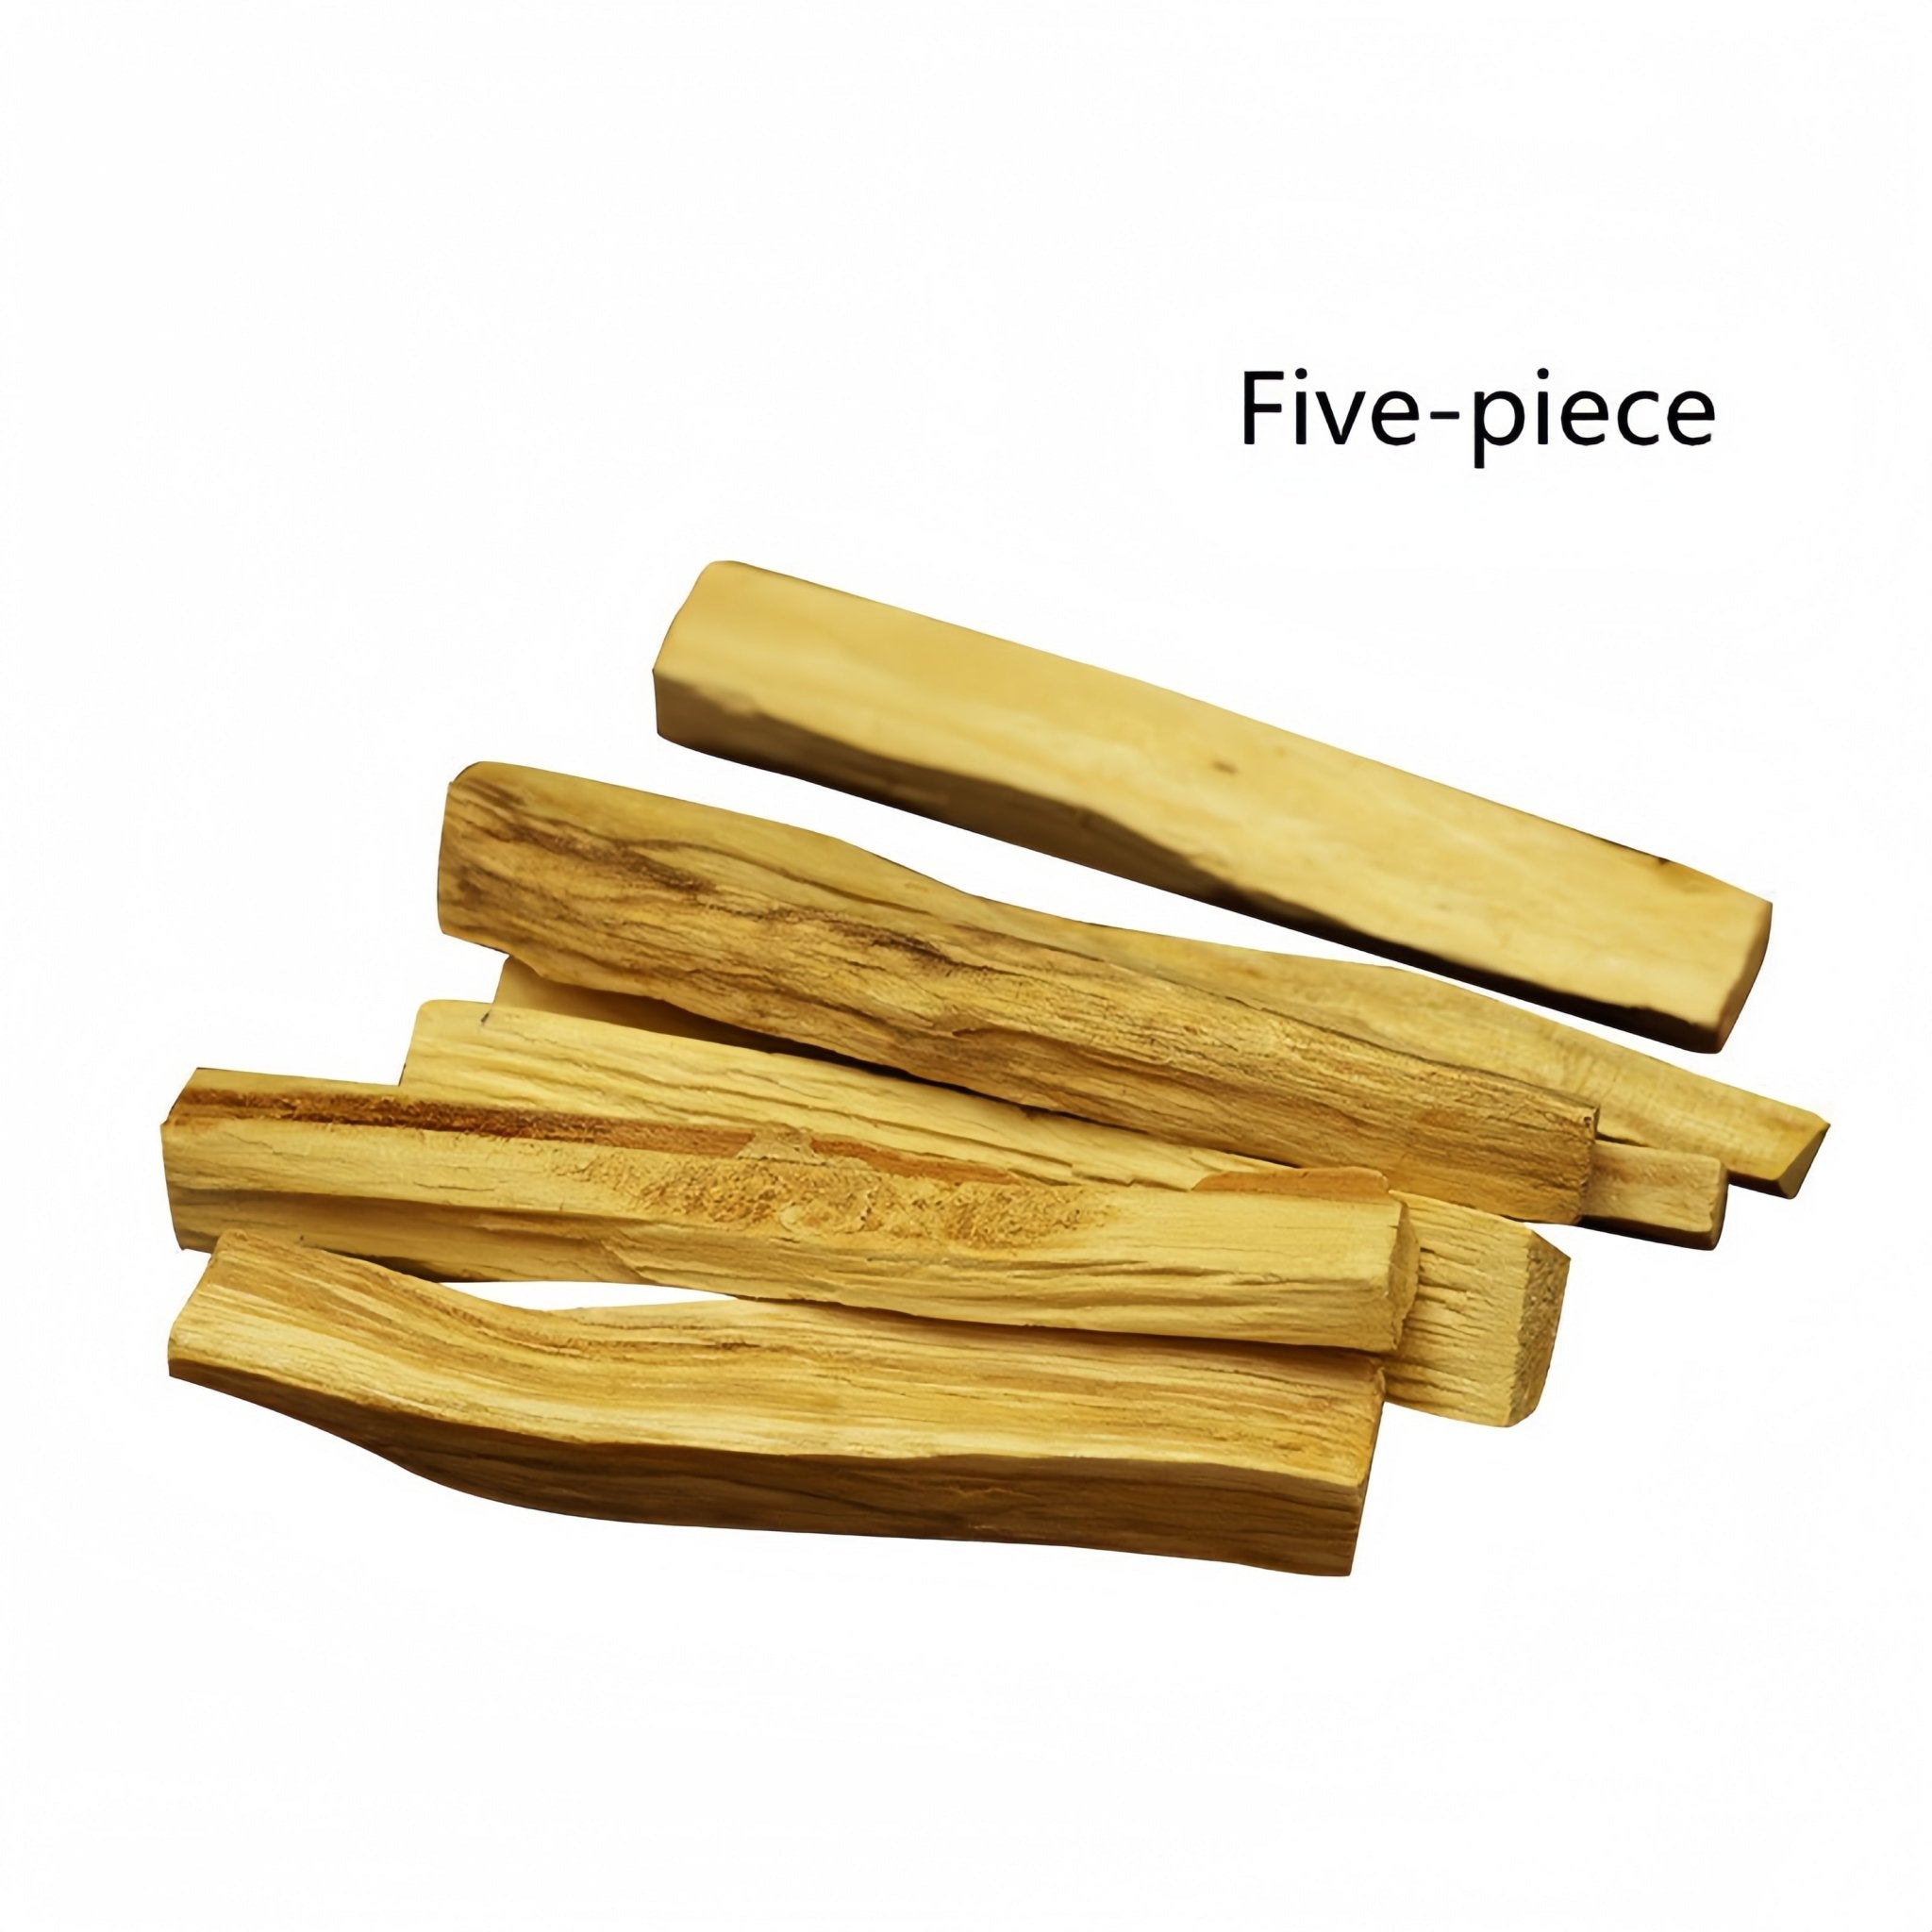 Five pieces of Peruvian Palo Santo wood.